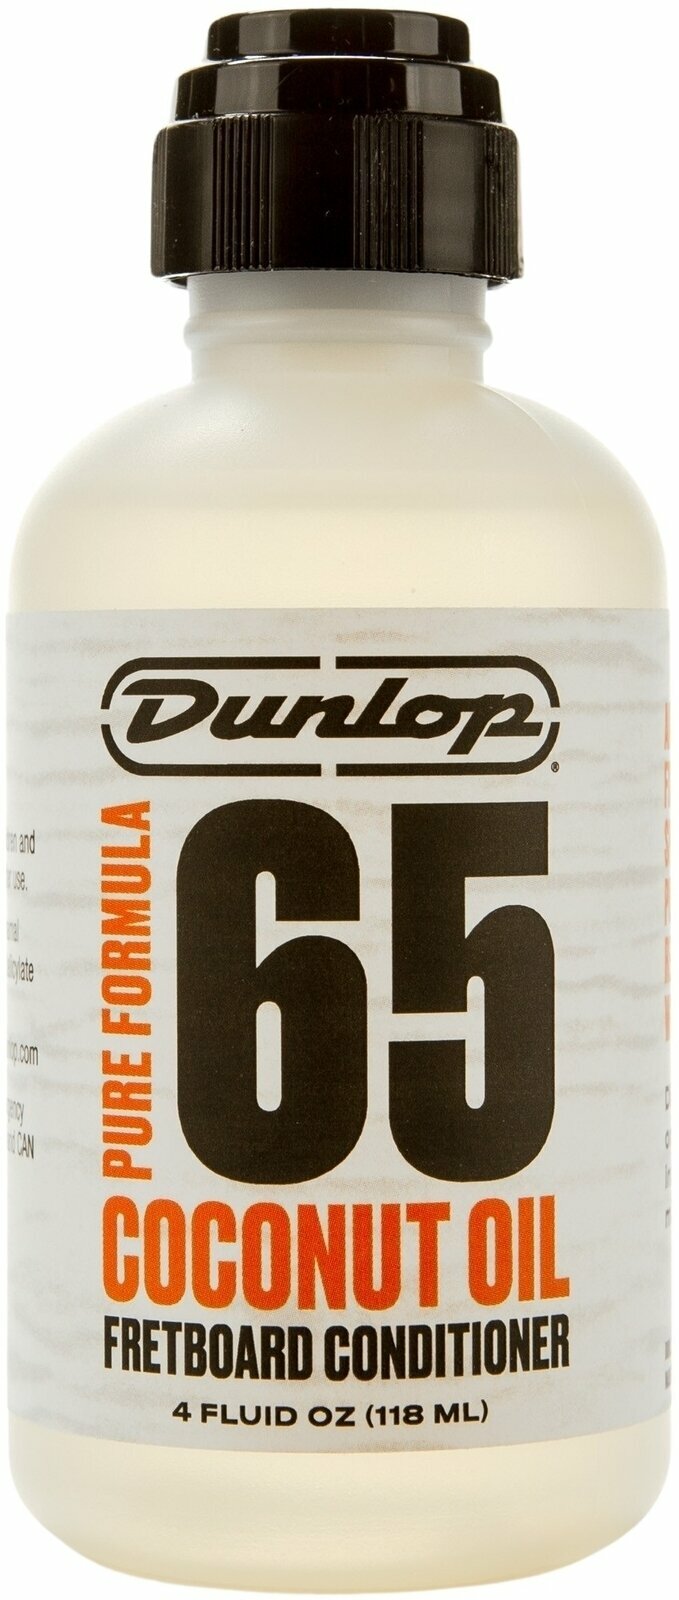 Guitar Care Dunlop Pure Formula 65 Coconut Oil